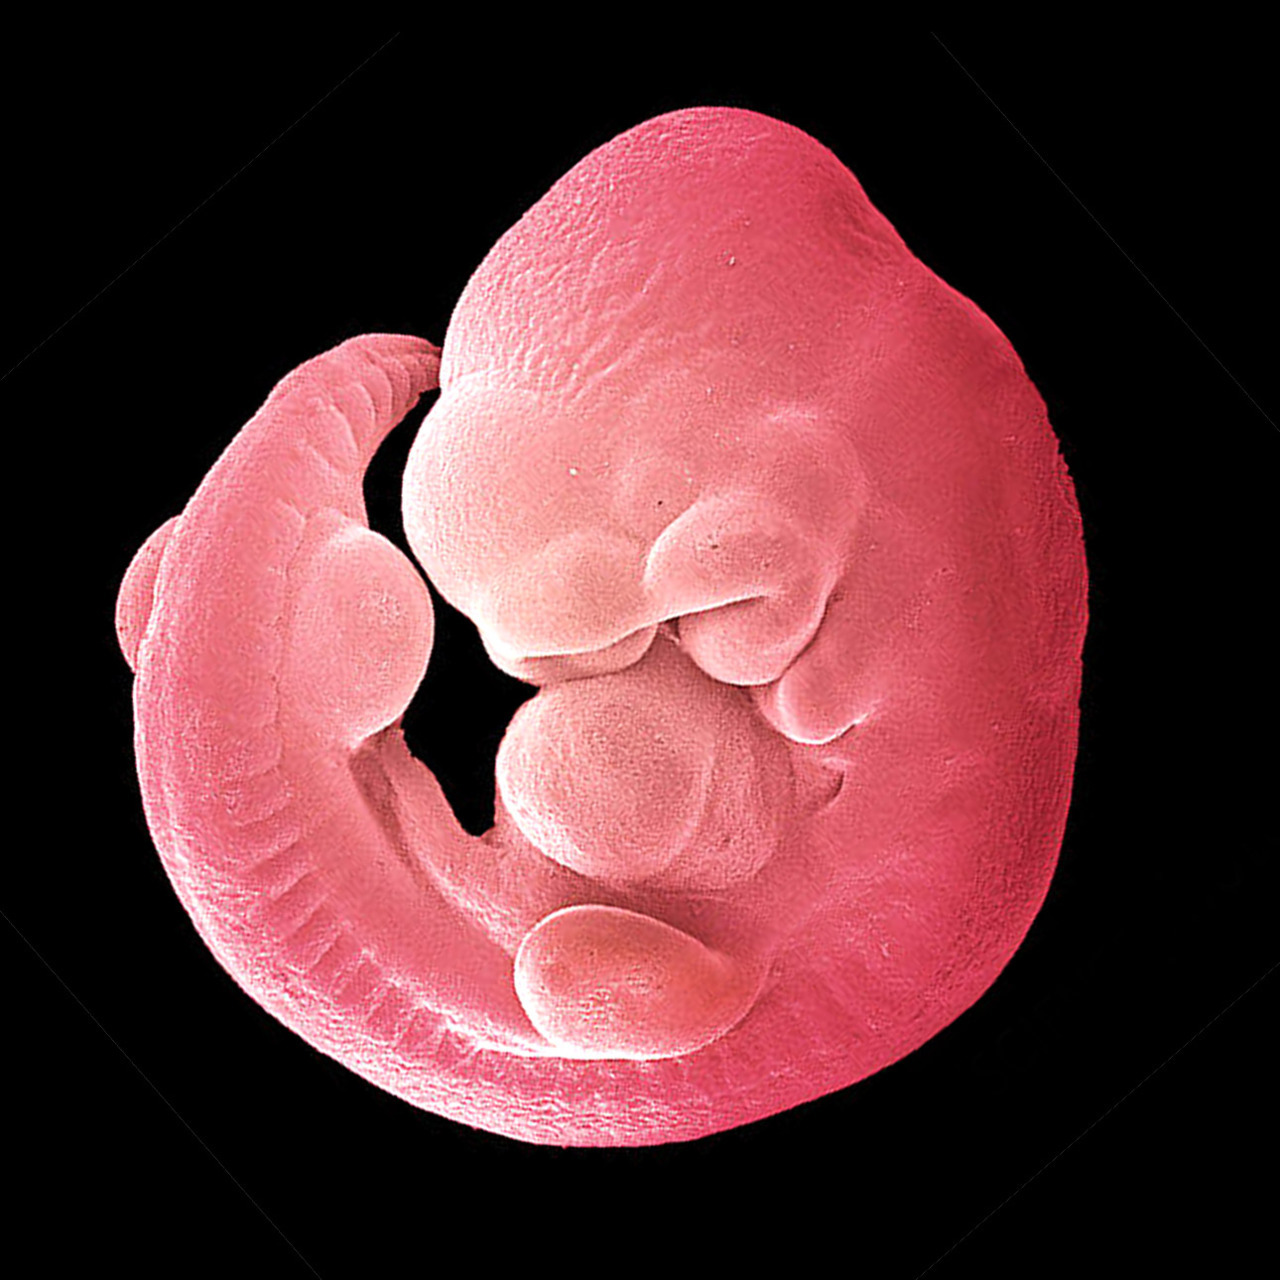 infinity-imagined: âA twelve day old embryo â